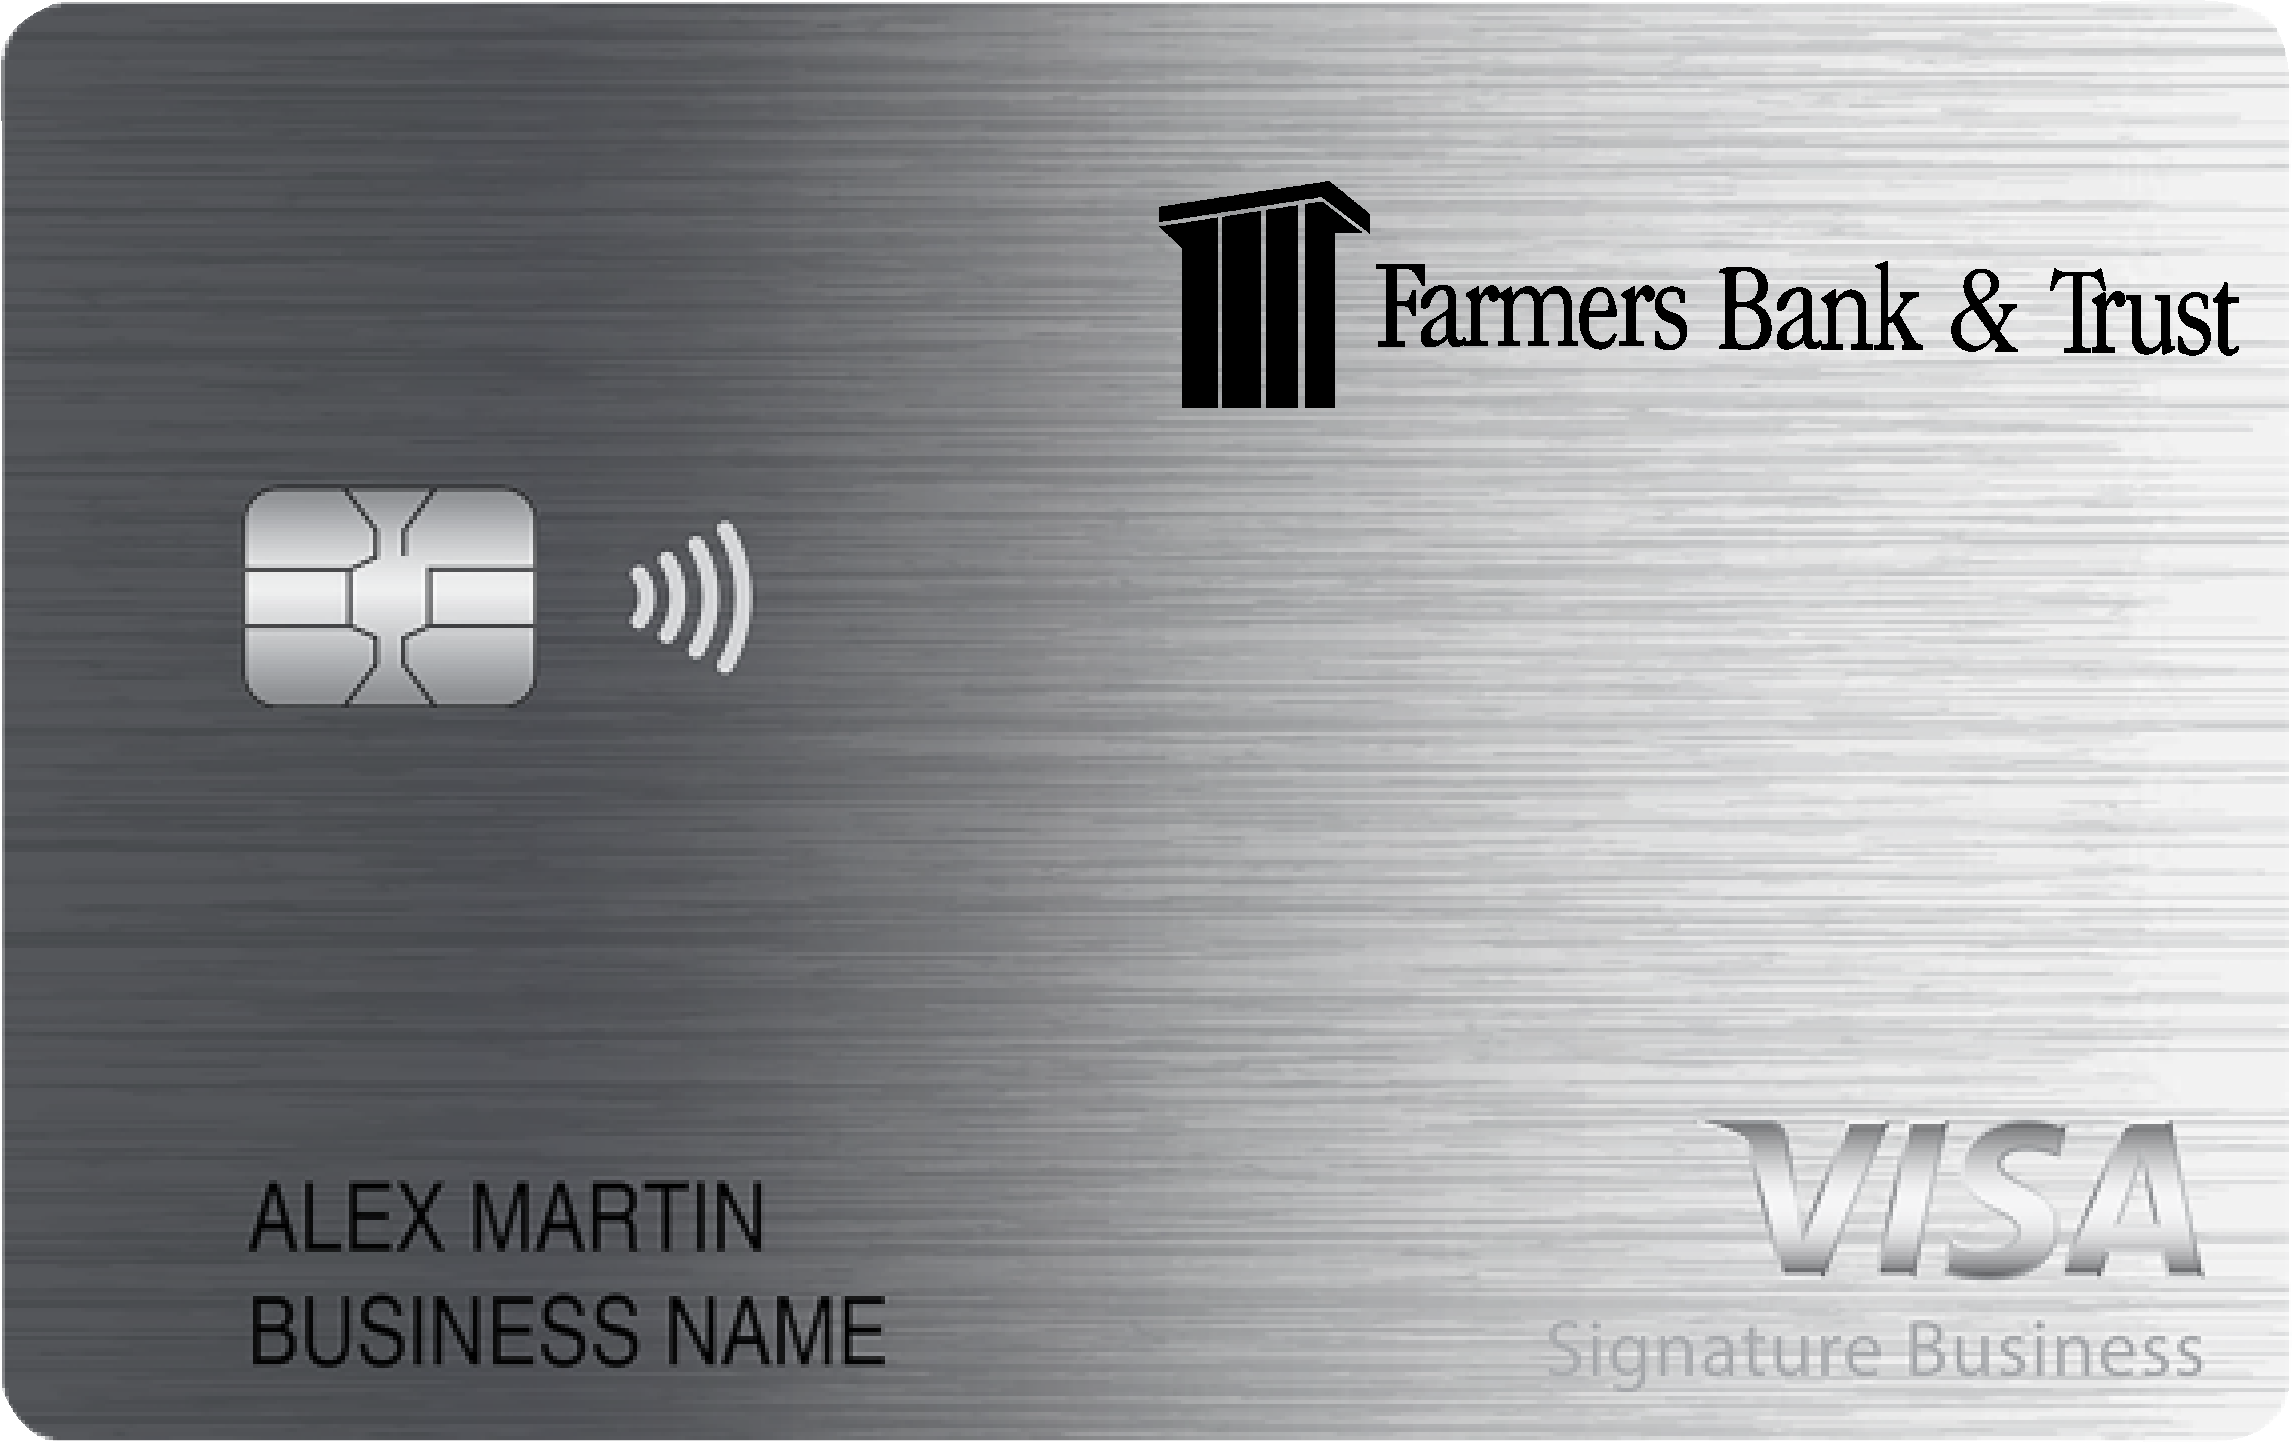 Farmers Bank & Trust Smart Business Rewards Card